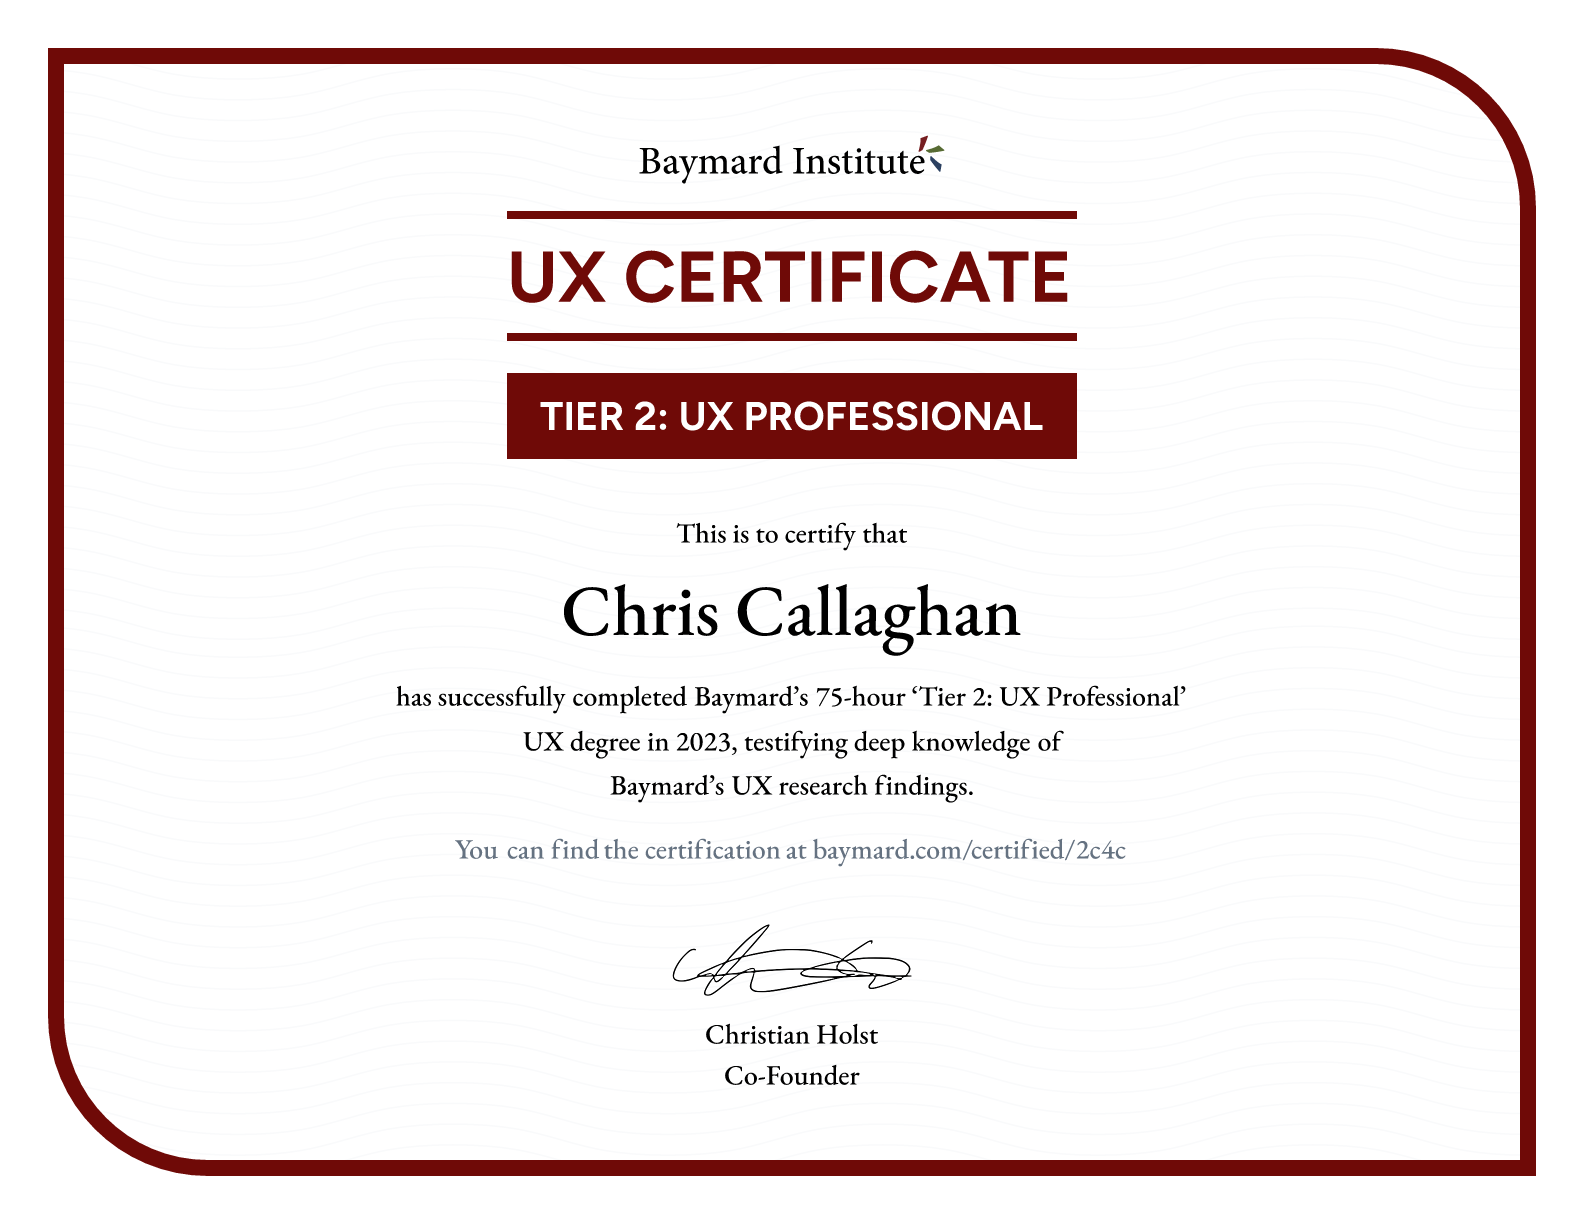 Chris Callaghan’s certificate